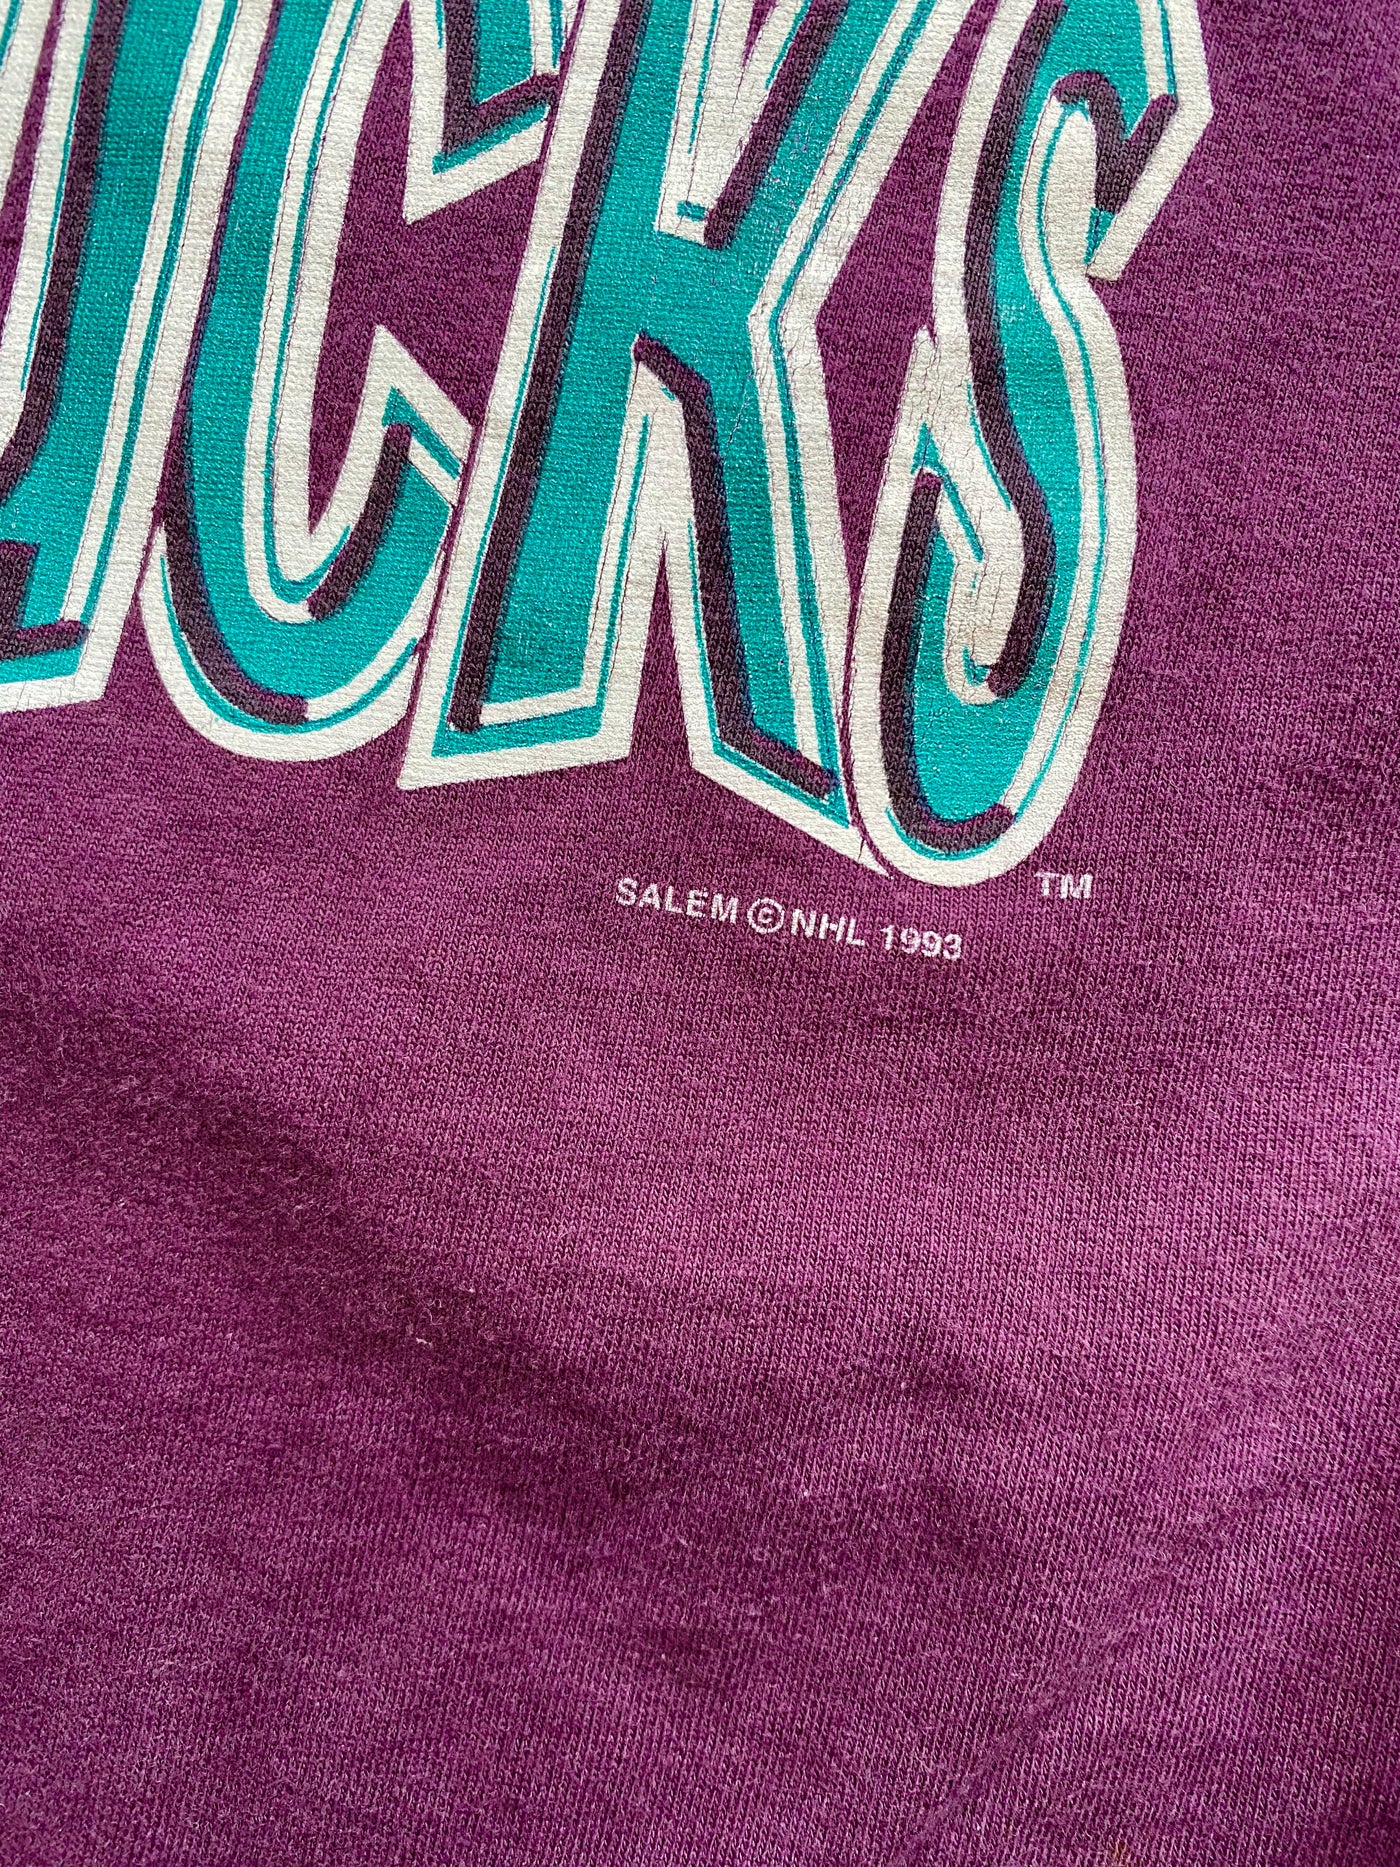 Vintage 1993 Mighty Ducks T-Shirt